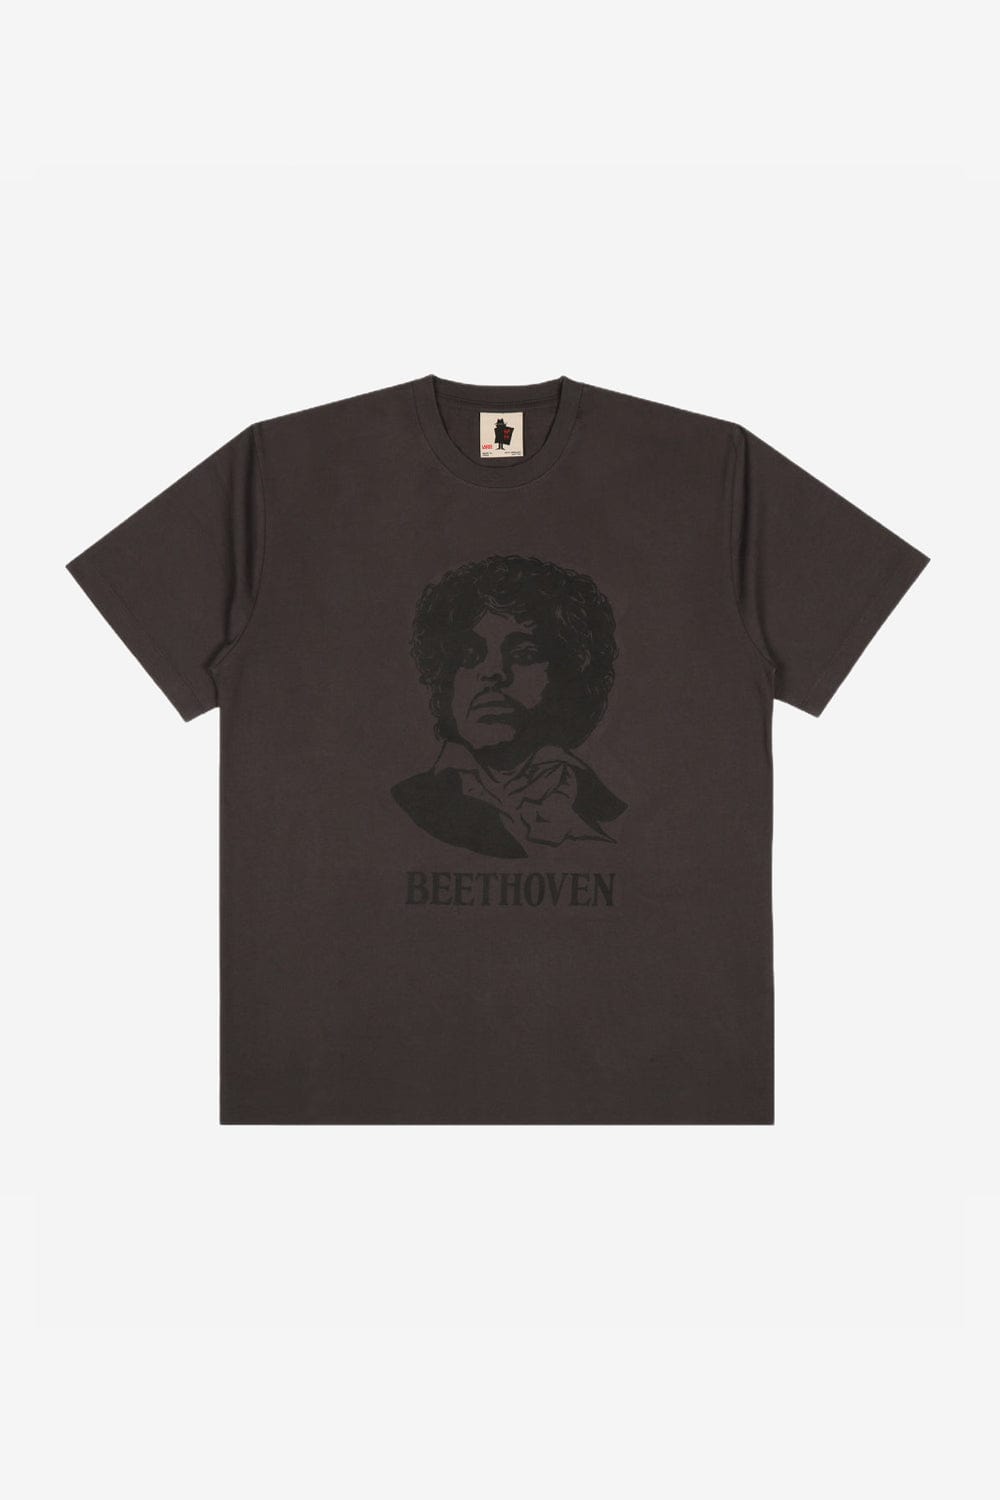 Real Bad Man Beethoven Tee (Washed Black)